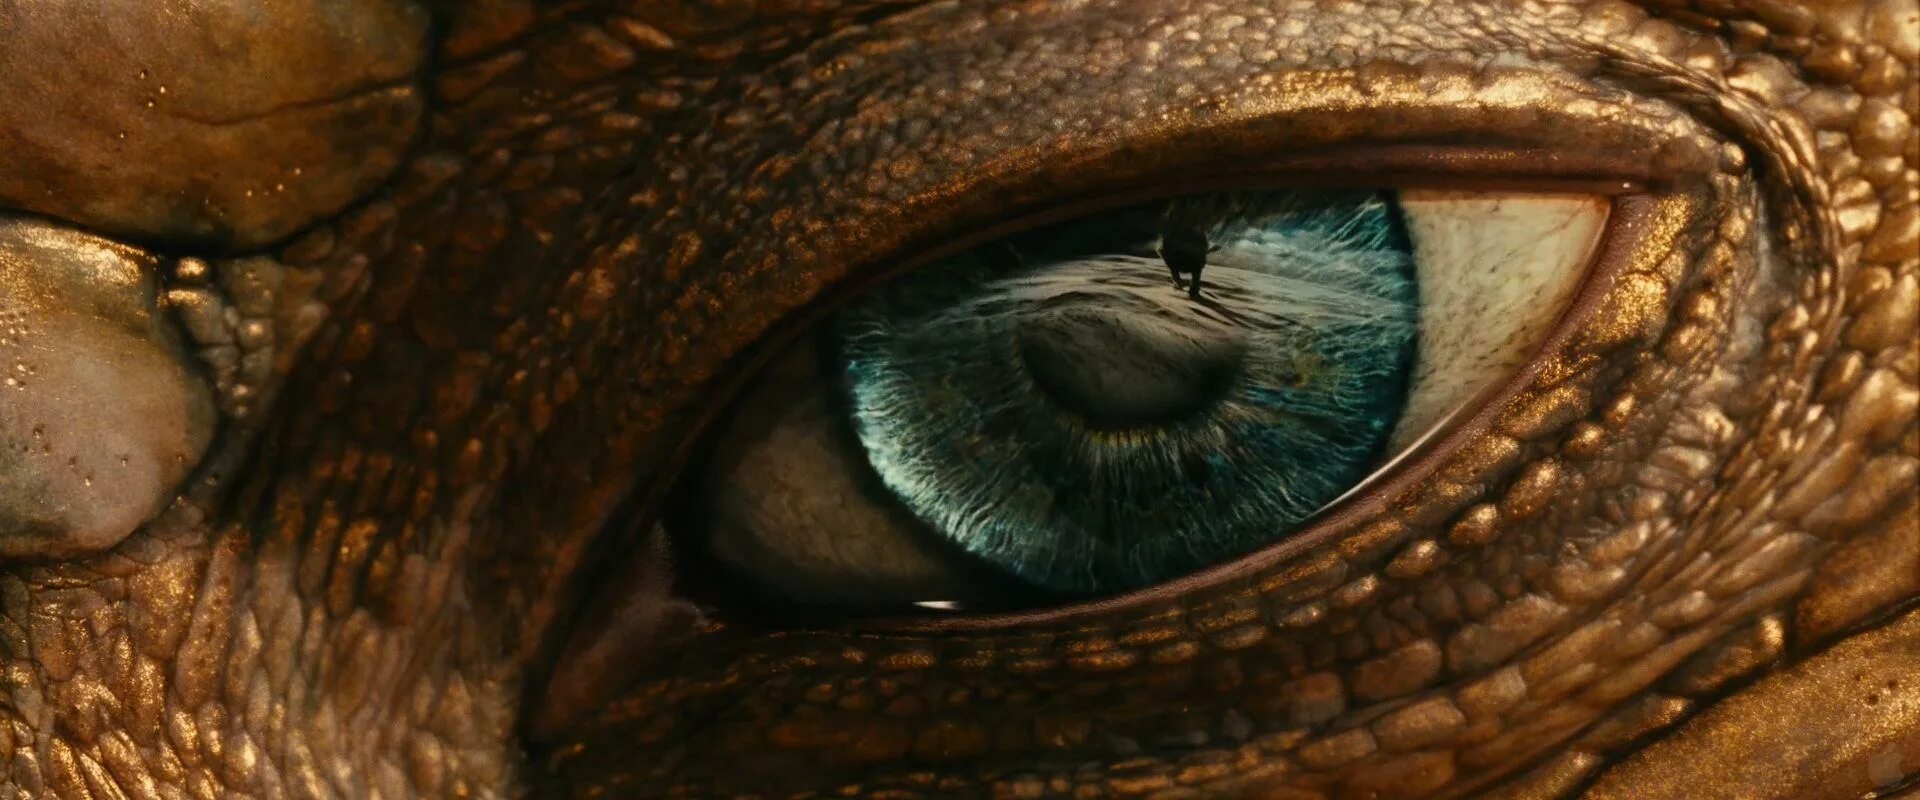 Dragon eye перевод. Хроники Нарнии дракон. Глаз дракона. Зрачок дракона. Глаз динозавра.